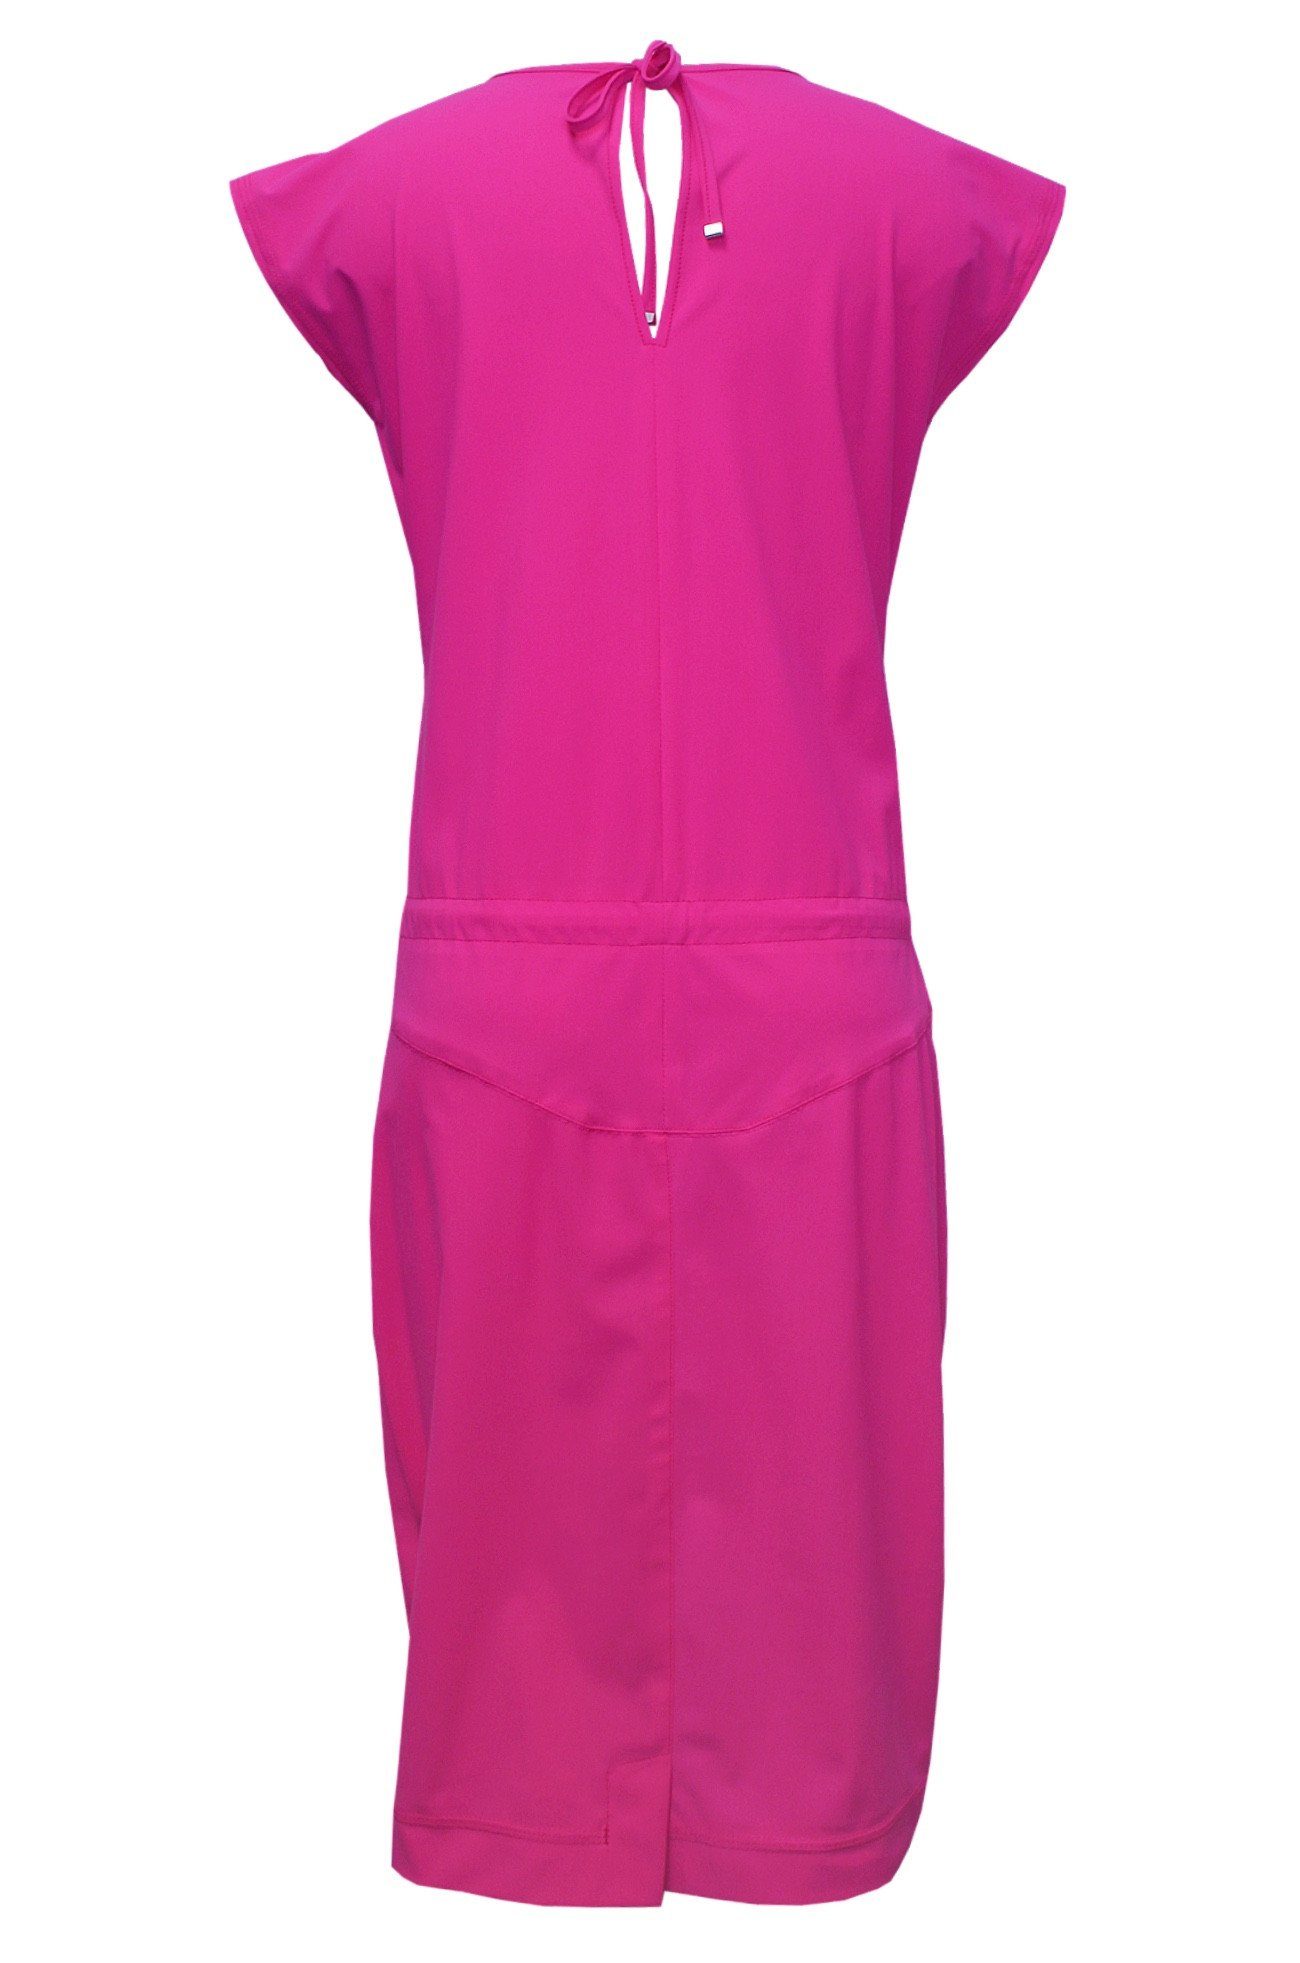 Raffaello Rossi Sommerkleid Gira Dress S pink